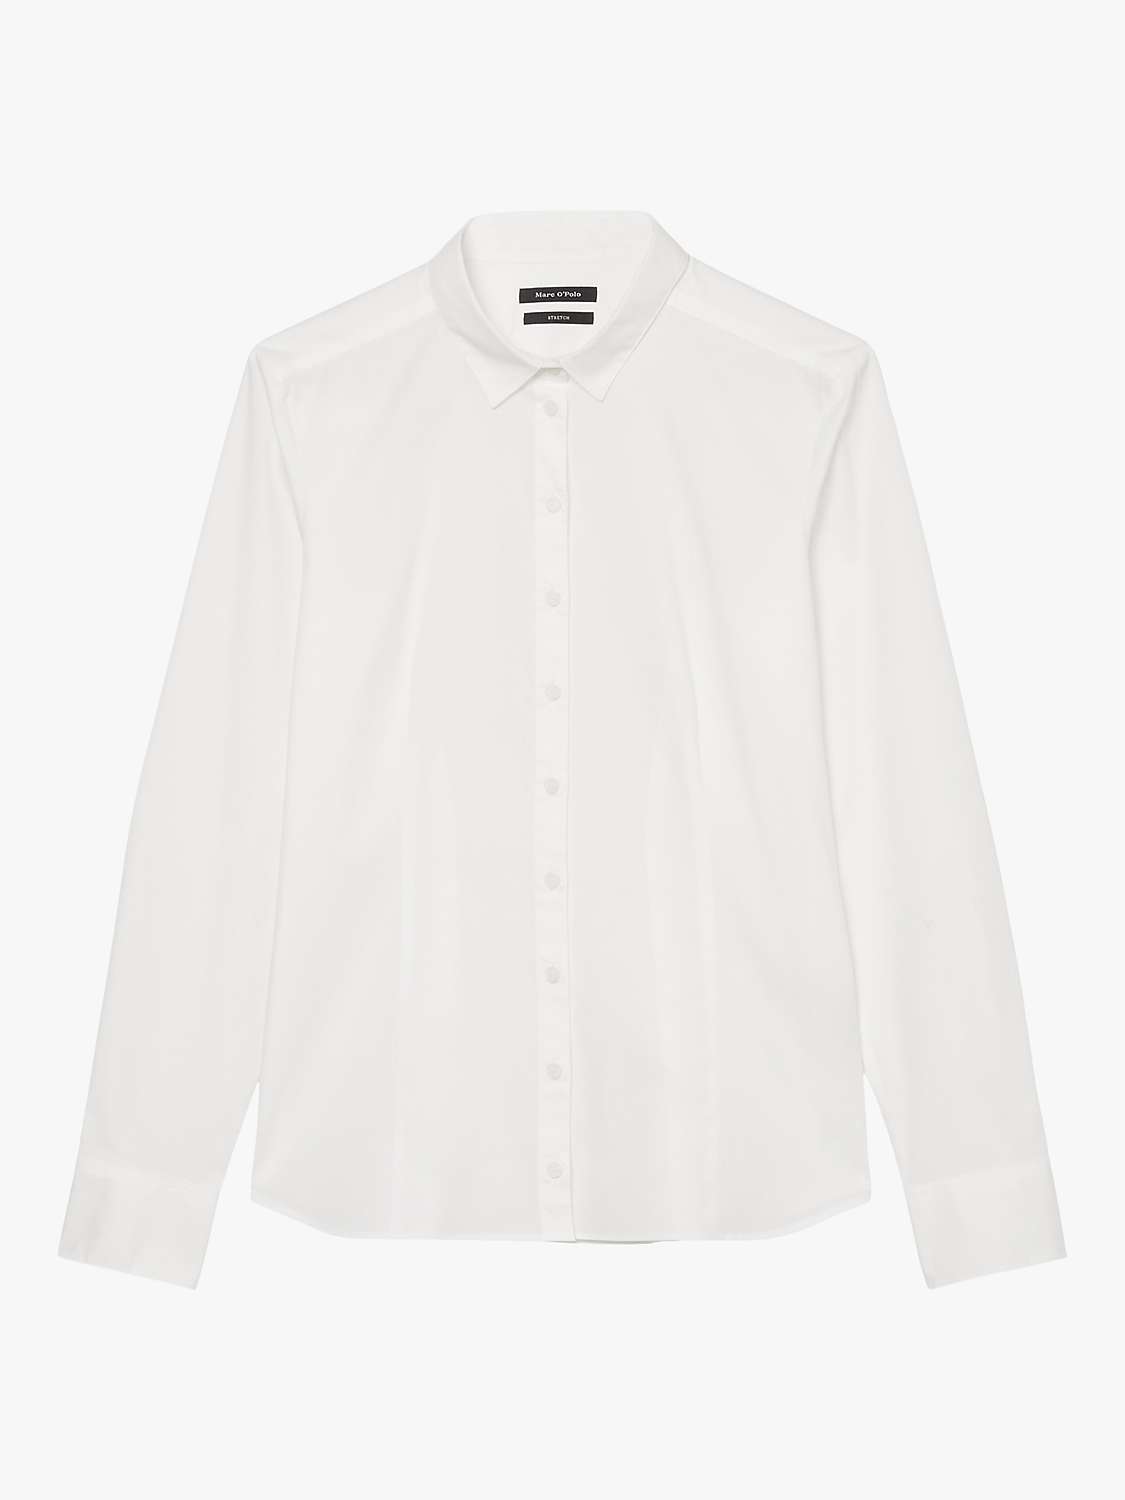 Marc O'Polo Cotton Logo Stitch Slim Fit Shirt, White at John Lewis ...